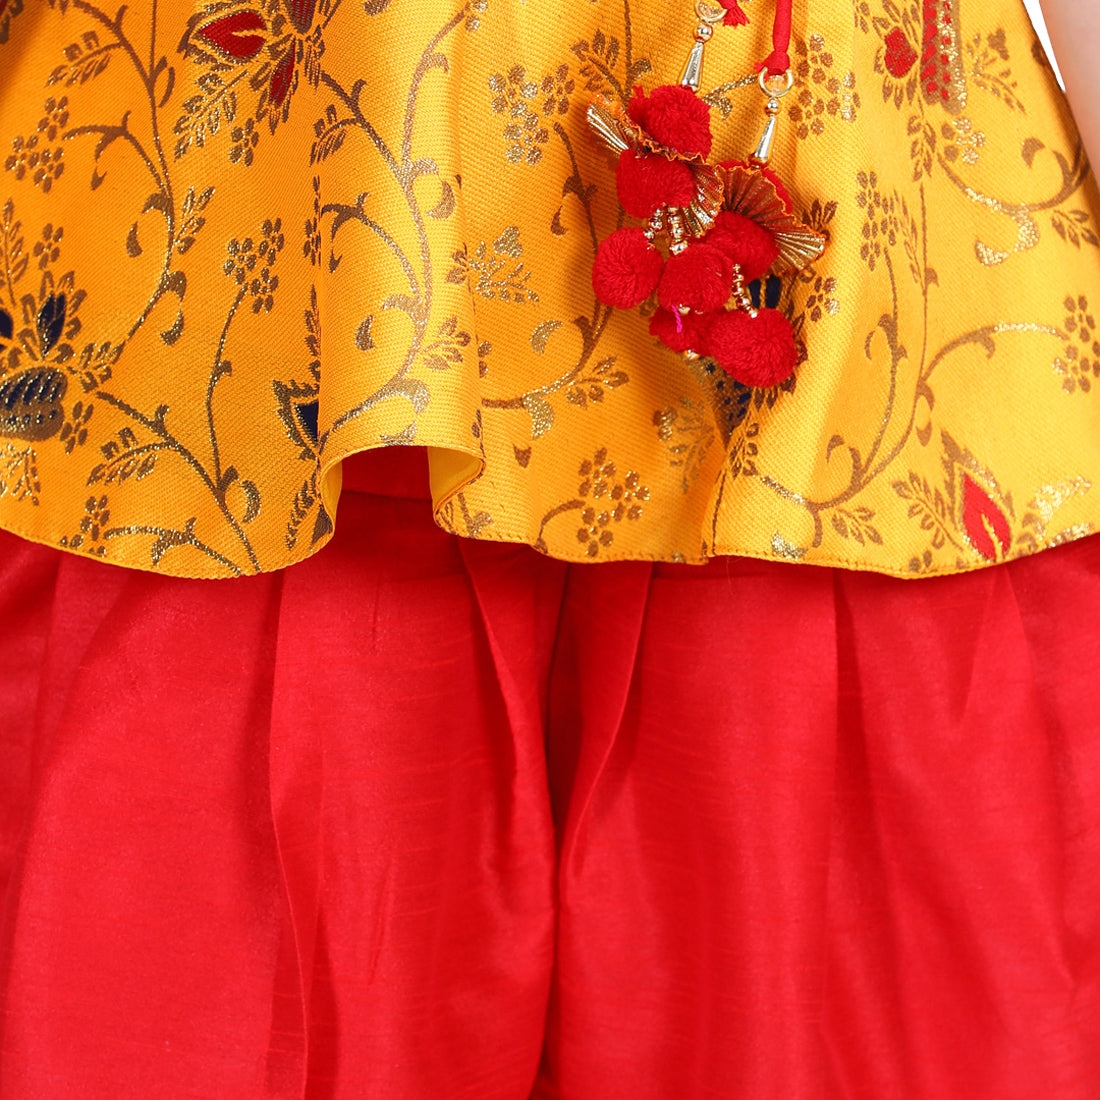 BownBee Flower Print Sleeveless Top With Silk Dhoti - Yellow